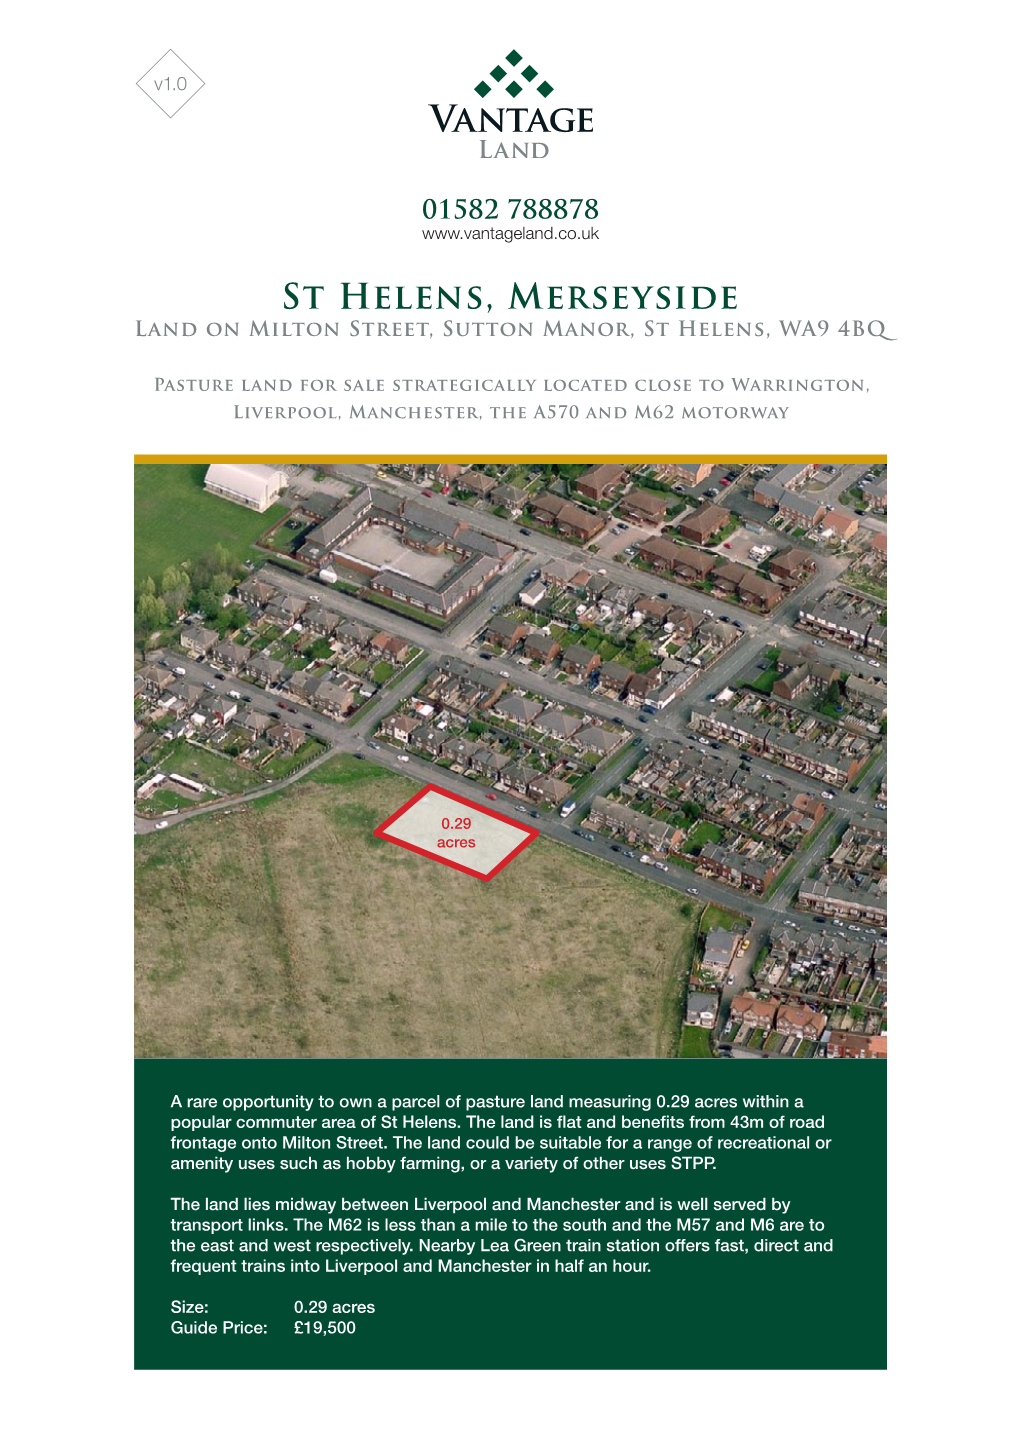 St Helens, Merseyside Land on Milton Street, Sutton Manor, St Helens, WA9 4BQ